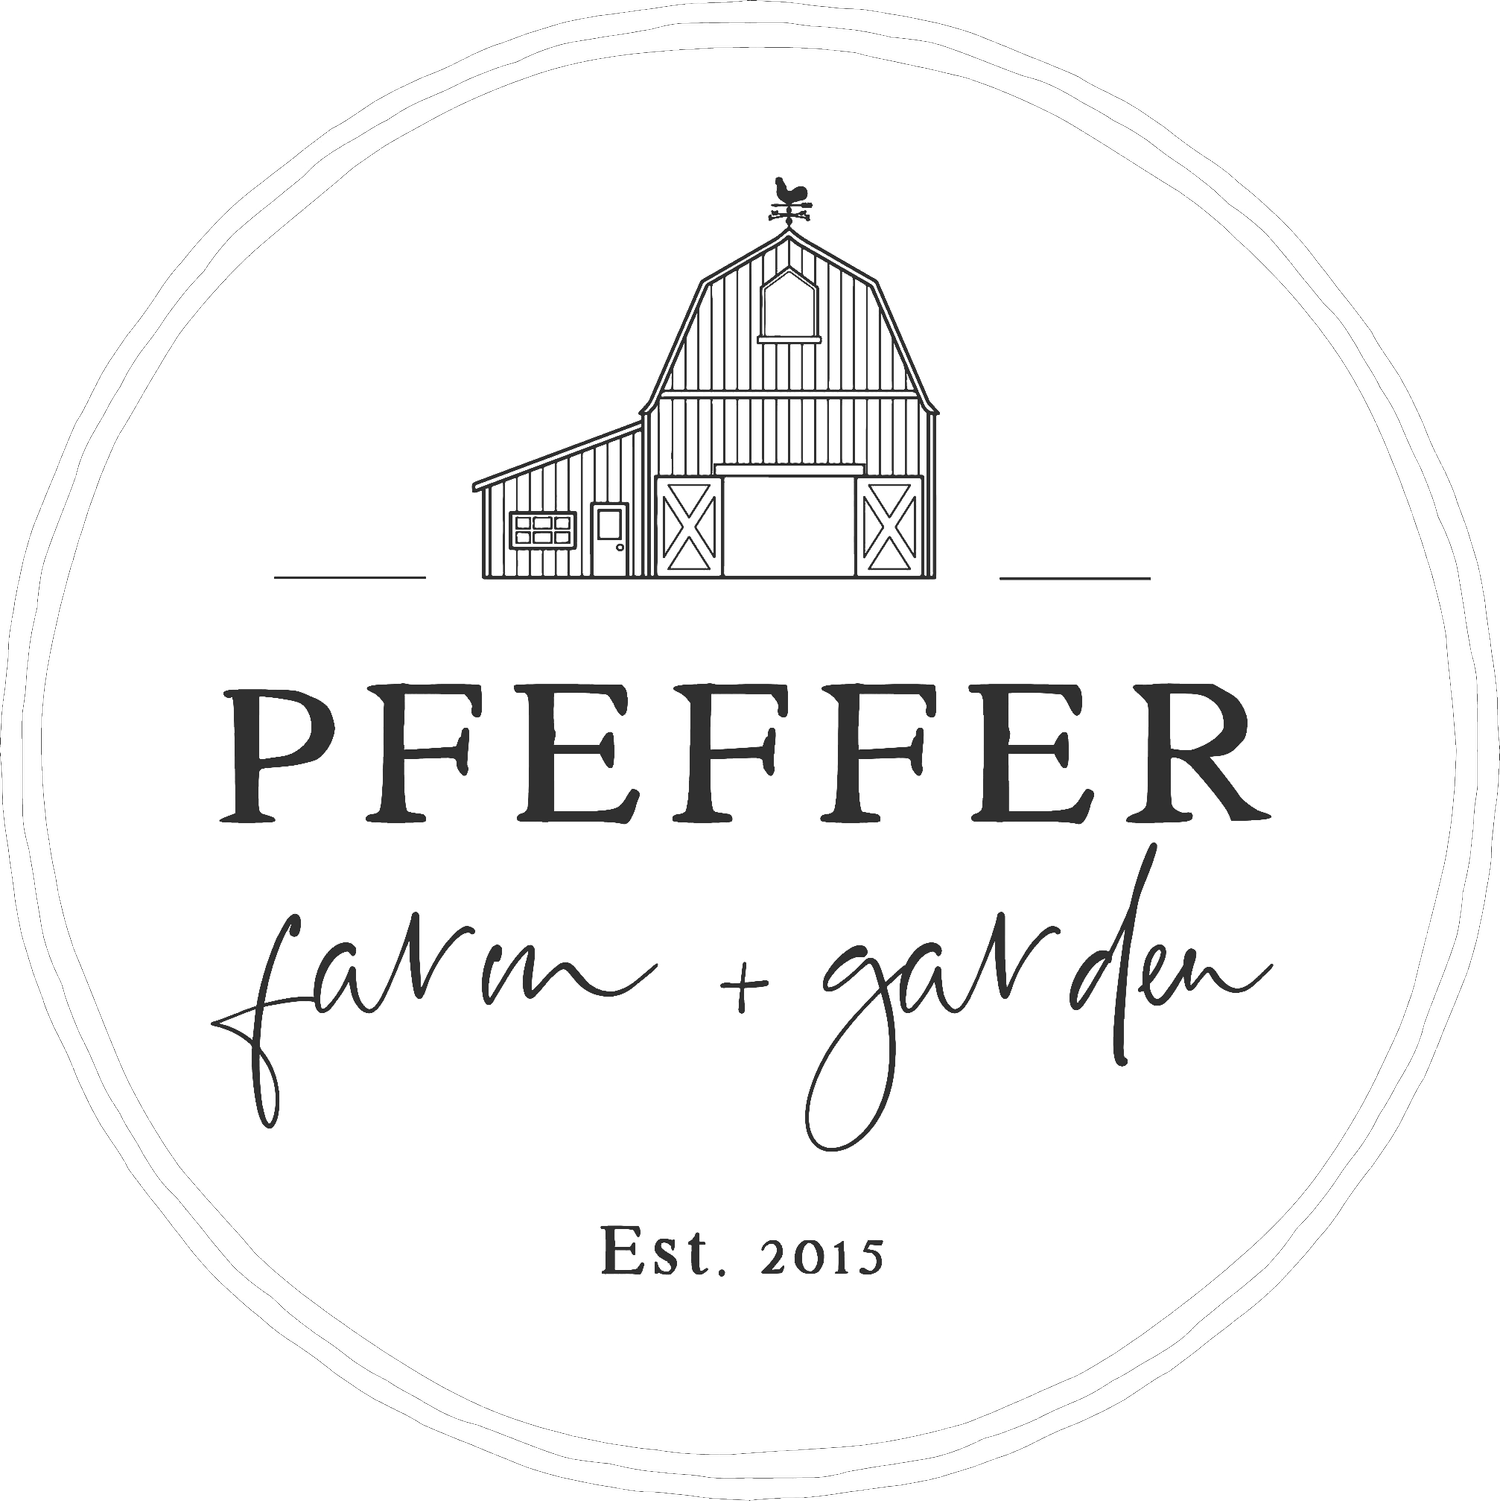 Pfeffer Farm and Garden